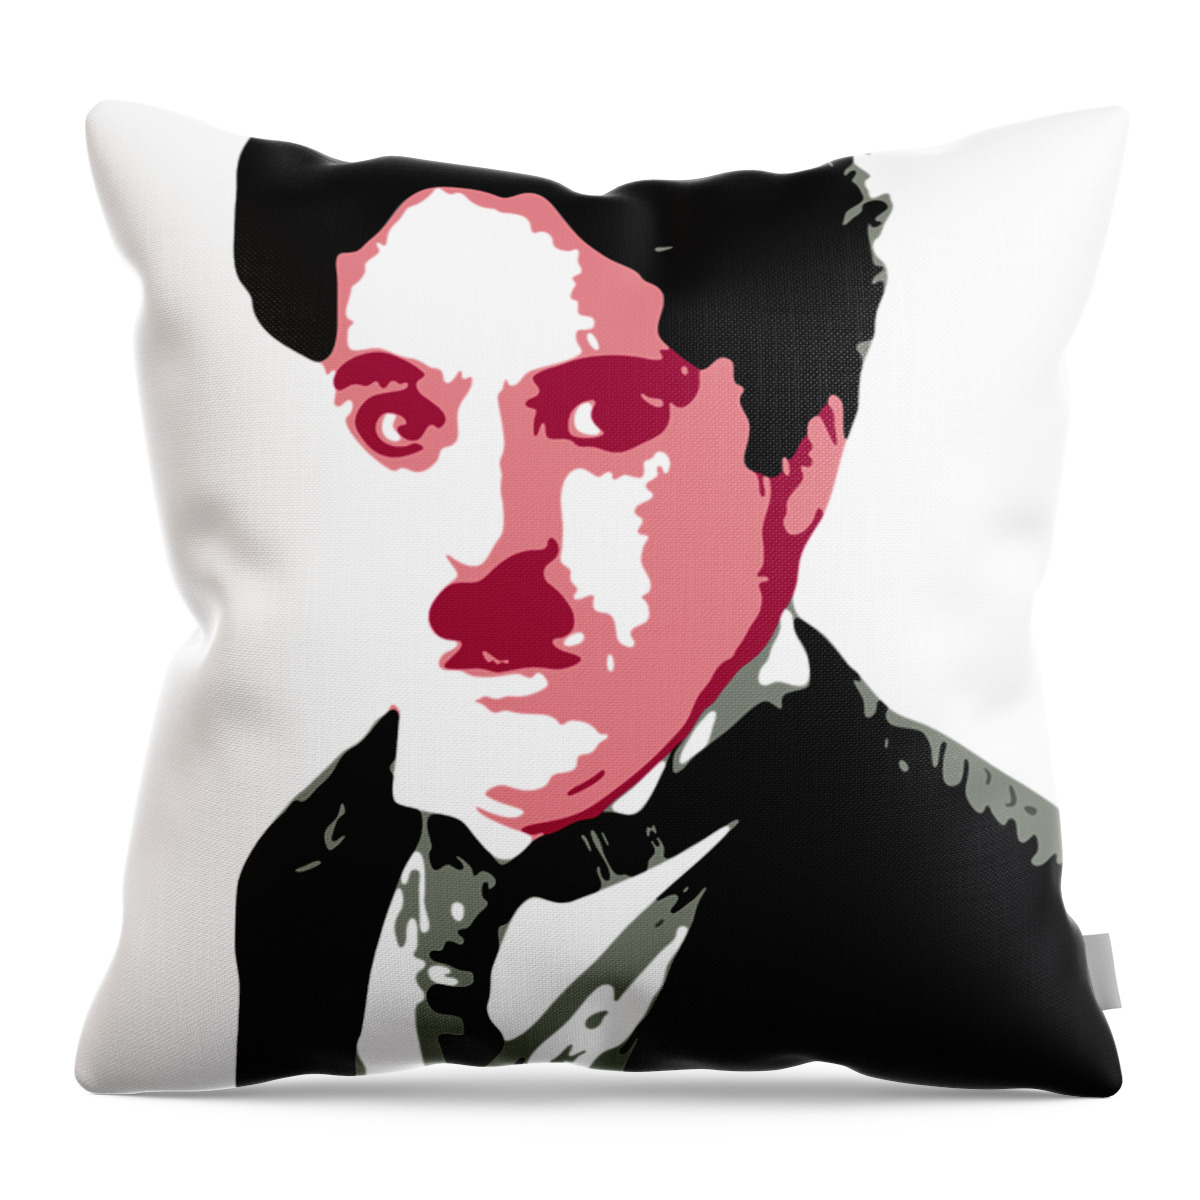 Charlie Chaplin Throw Pillow featuring the digital art Charlie Chaplin by DB Artist